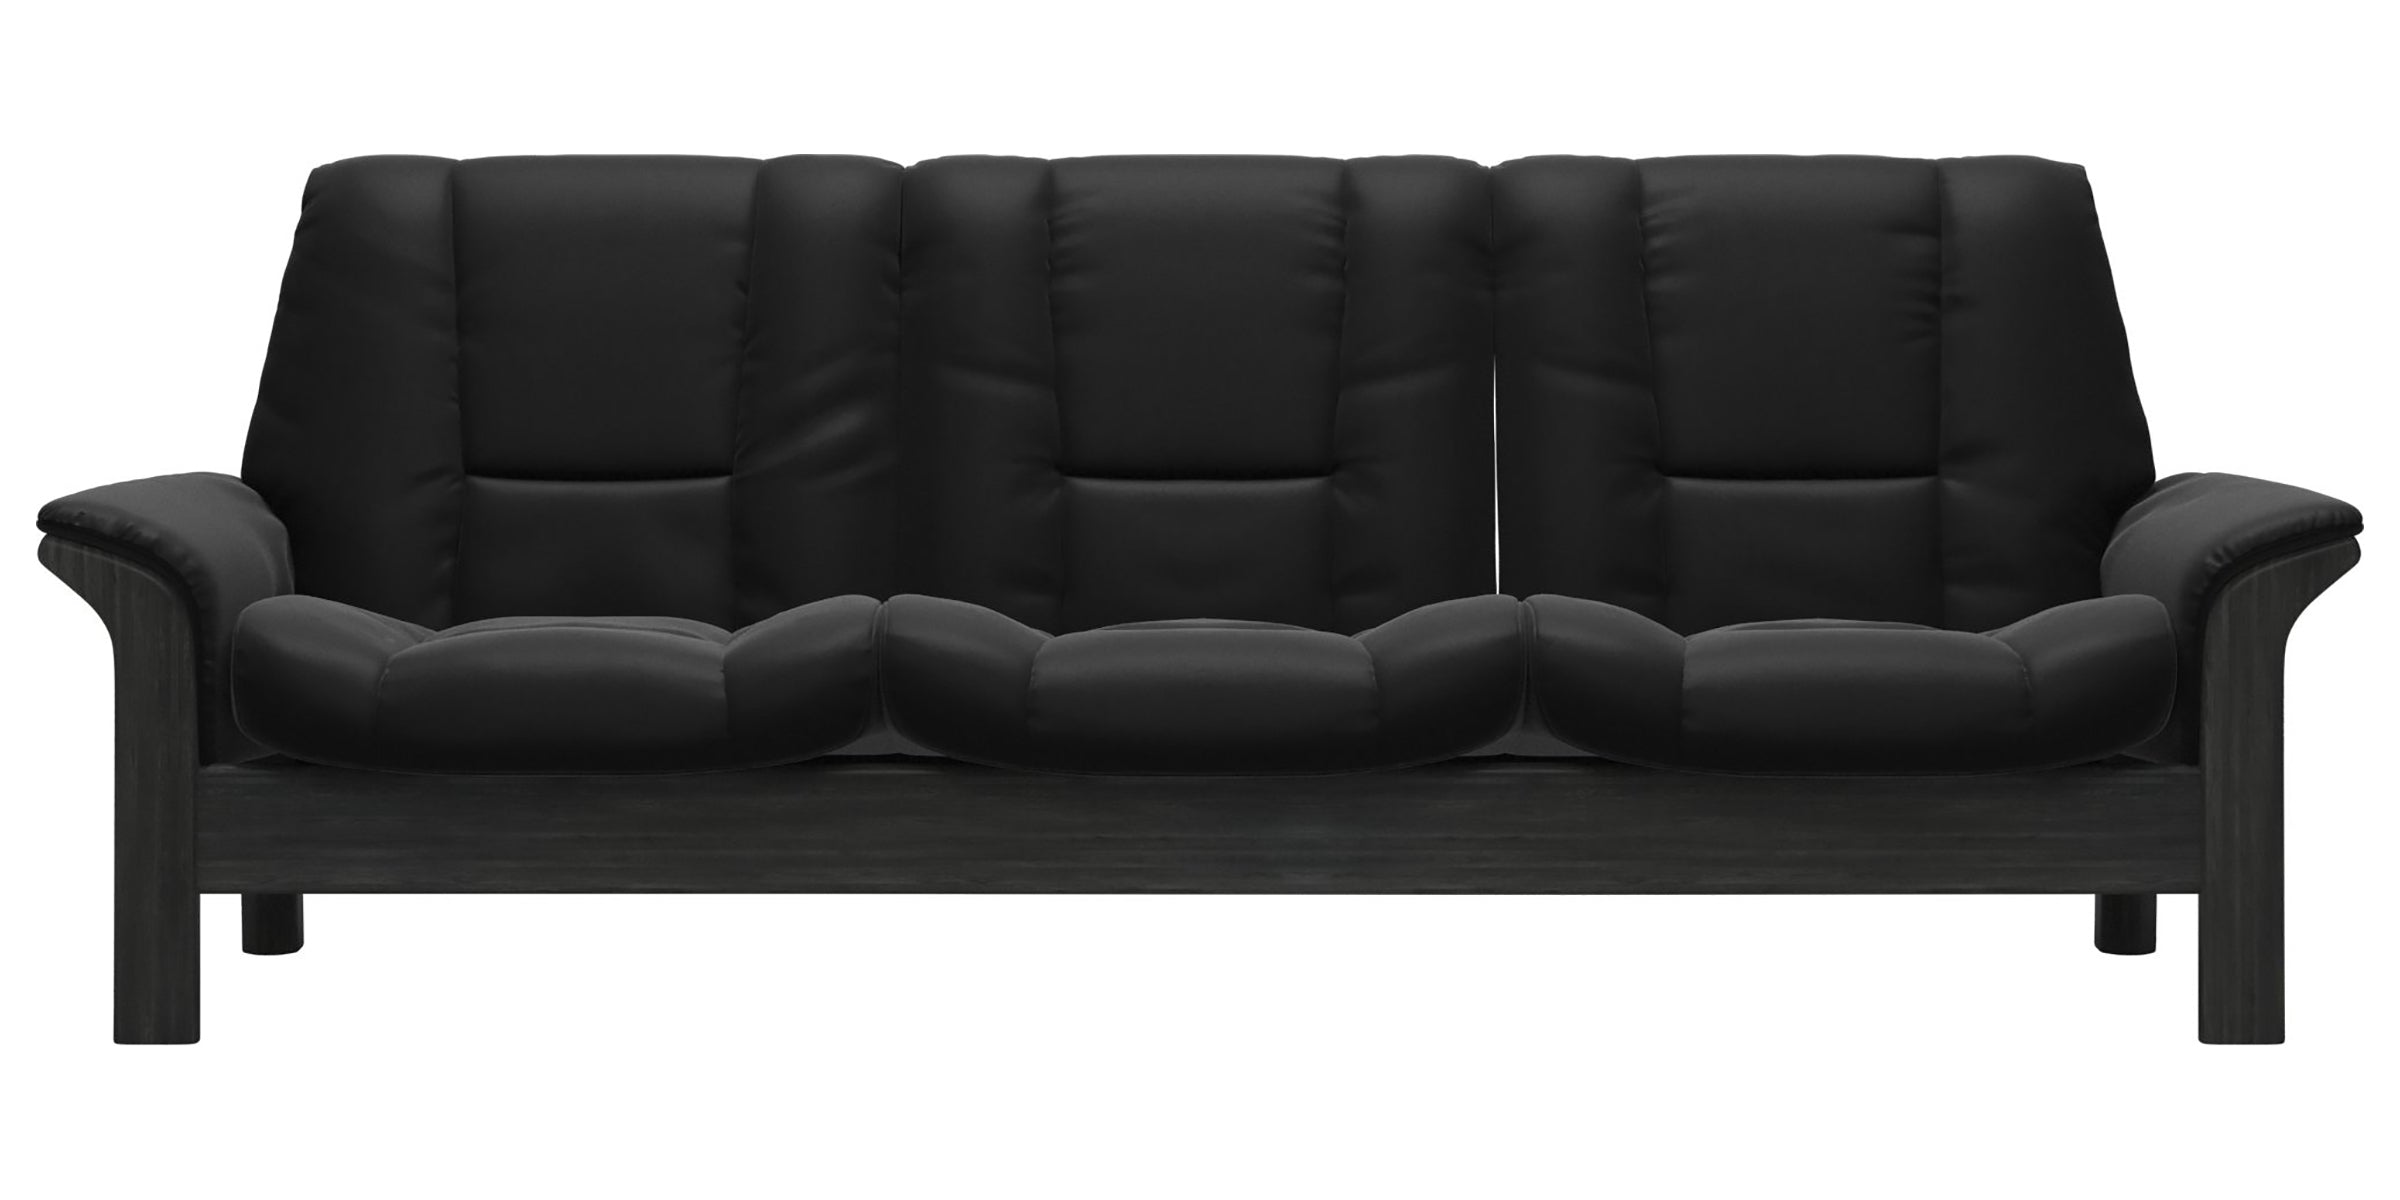 Paloma Leather Black and Grey Base | Stressless Buckingham 3-Seater Low Back Sofa | Valley Ridge Furniture